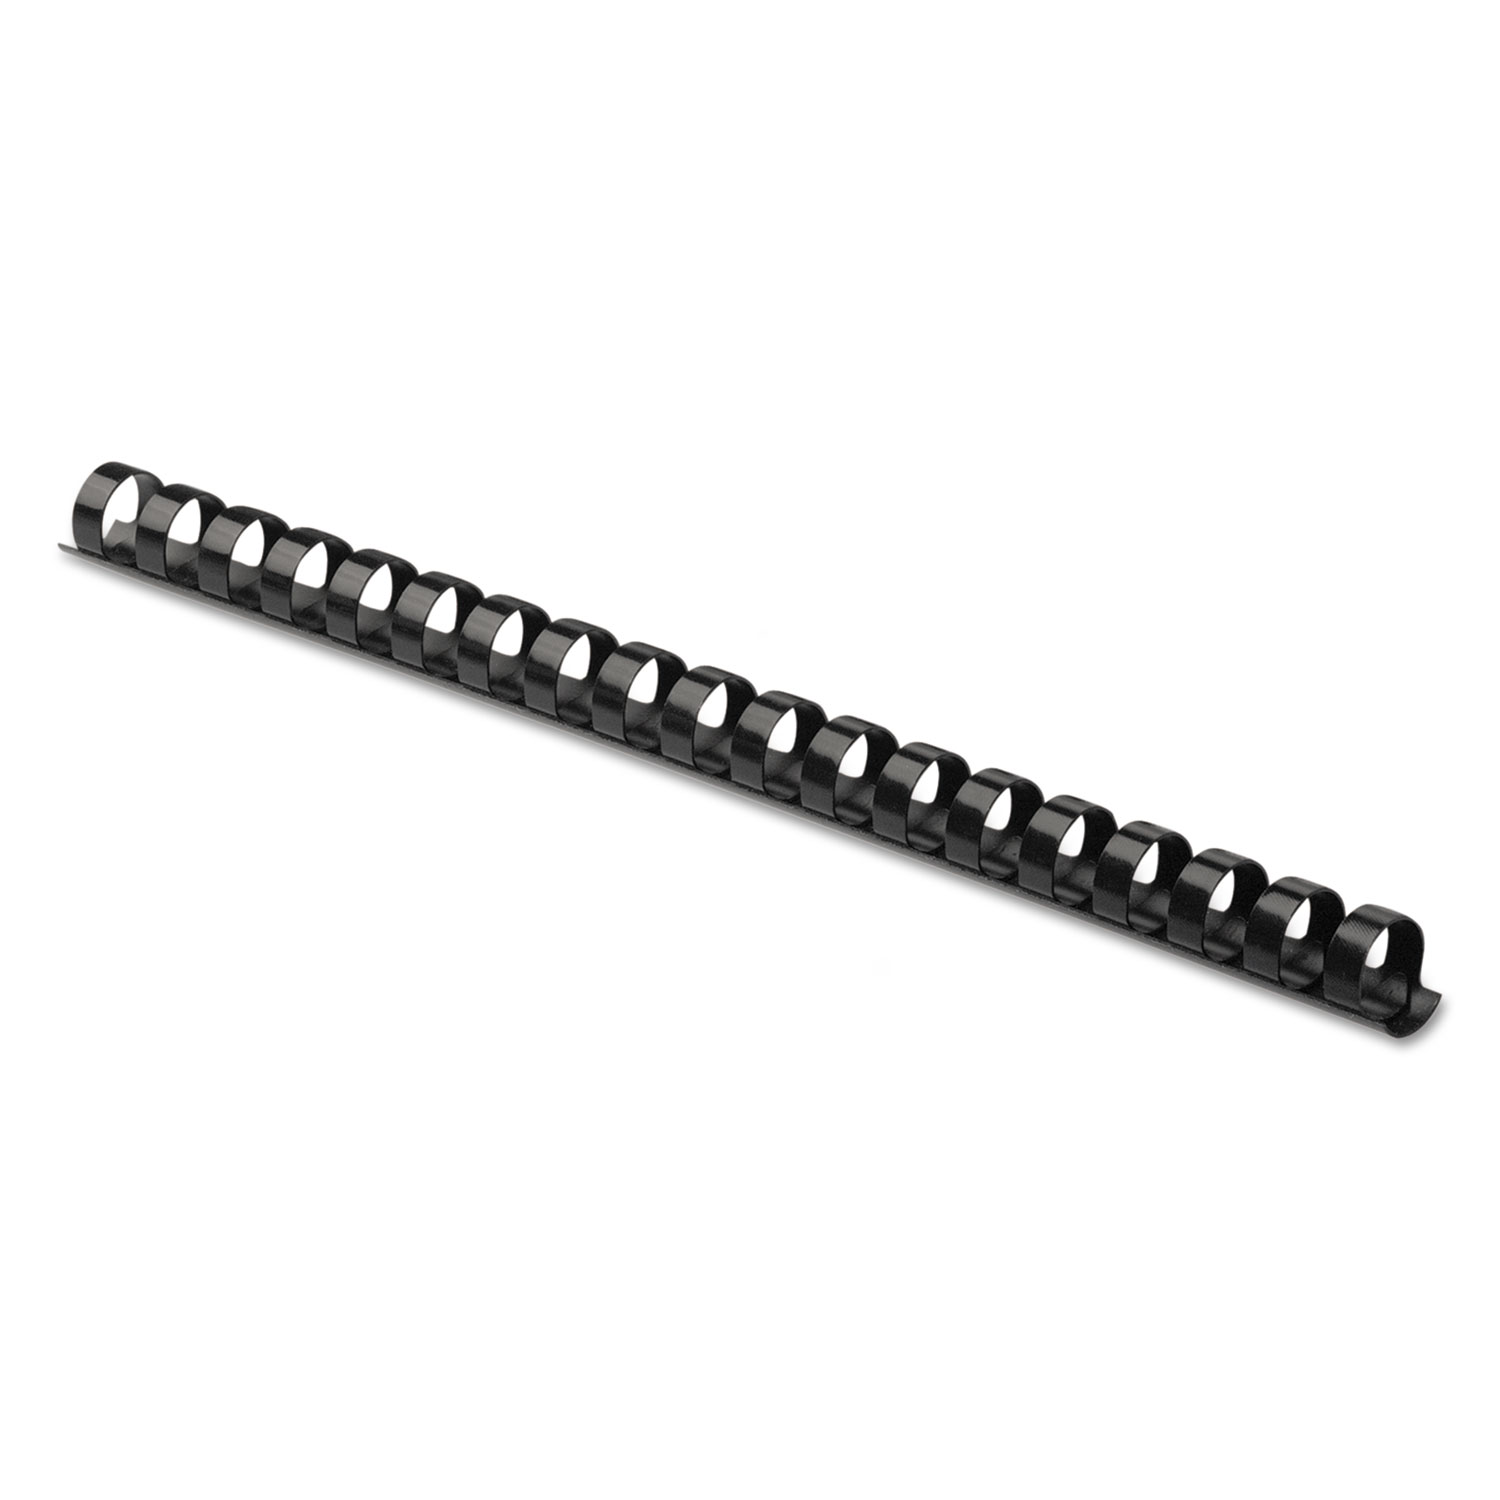 Fellowes FEL52325 Plastic Comb Bindings, 3/8" Diameter, 55 Sheet Capacity, Black, 100 Combs/Pack